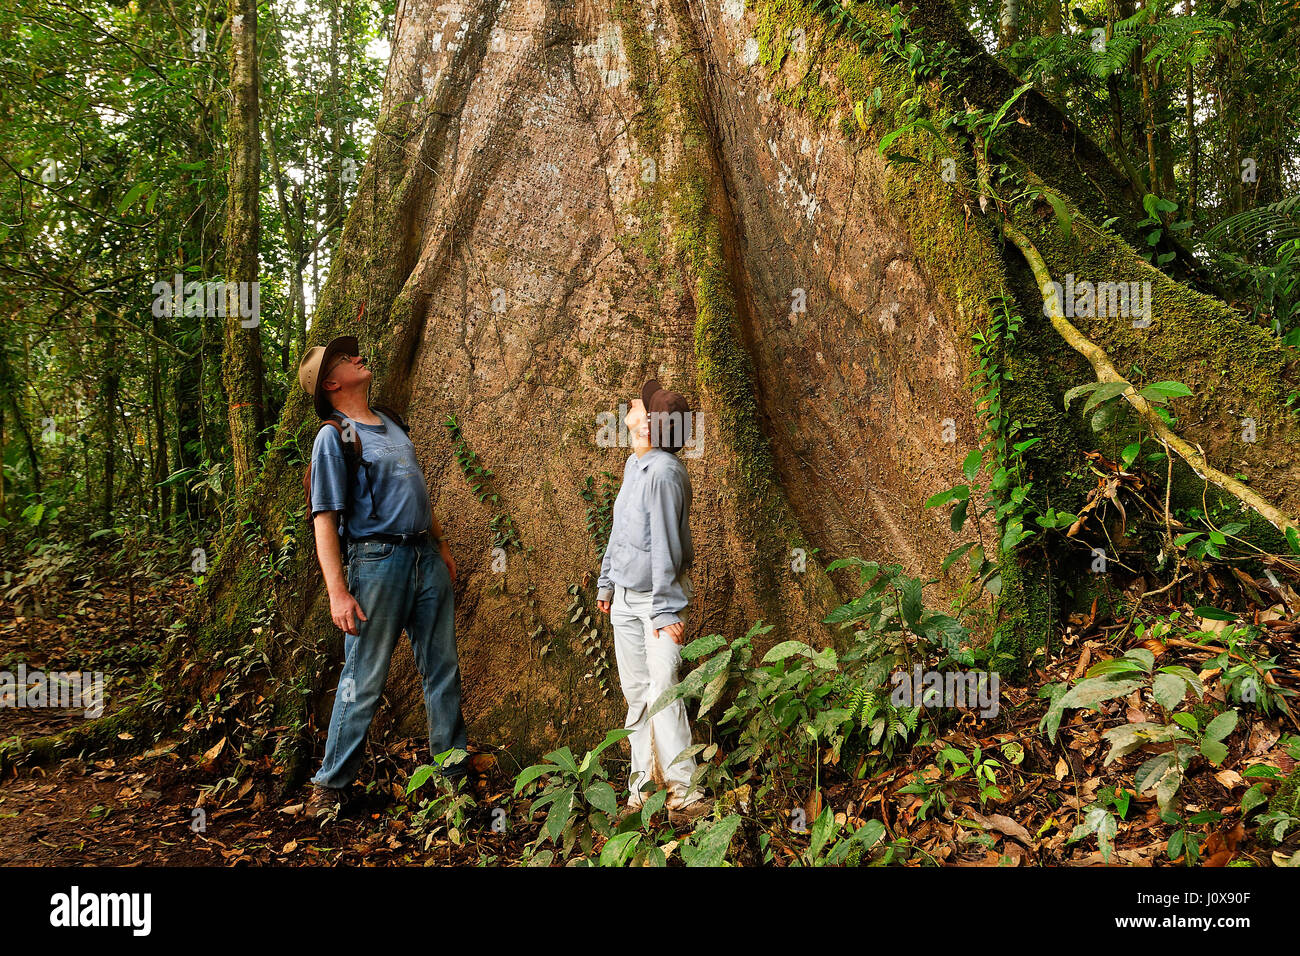 Giant tree in Yasuni national park, Ecuador Stock Photo